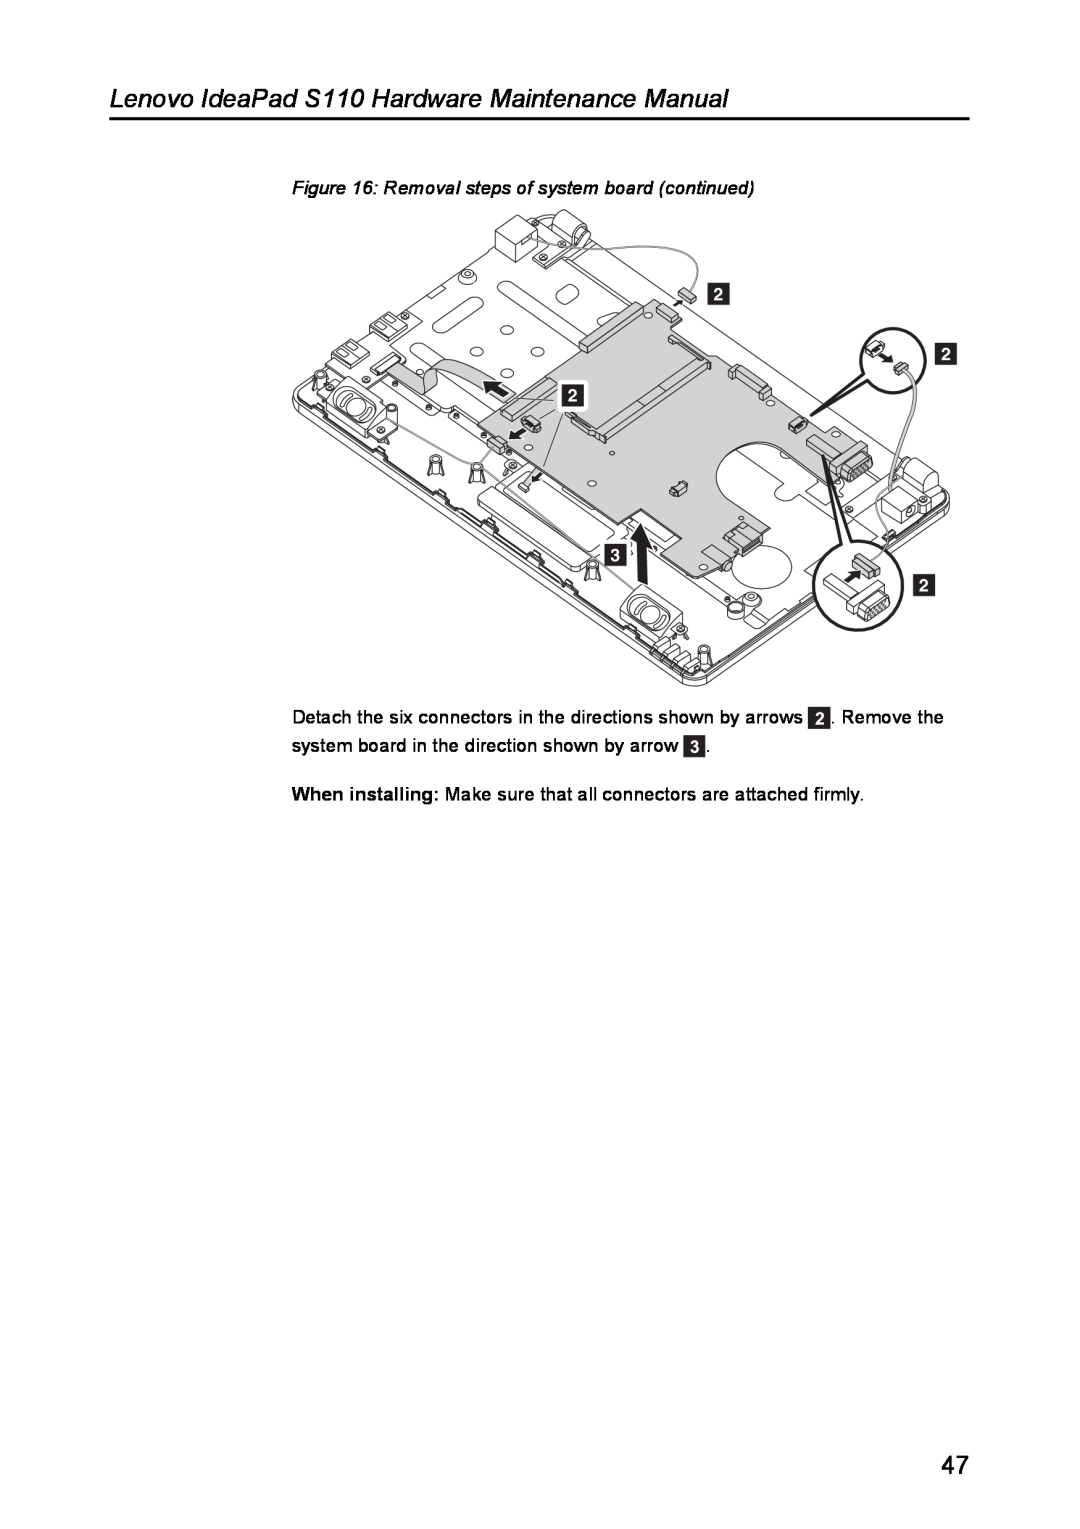 Lenovo manual Removal steps of system board continued, Lenovo IdeaPad S110 Hardware Maintenance Manual 